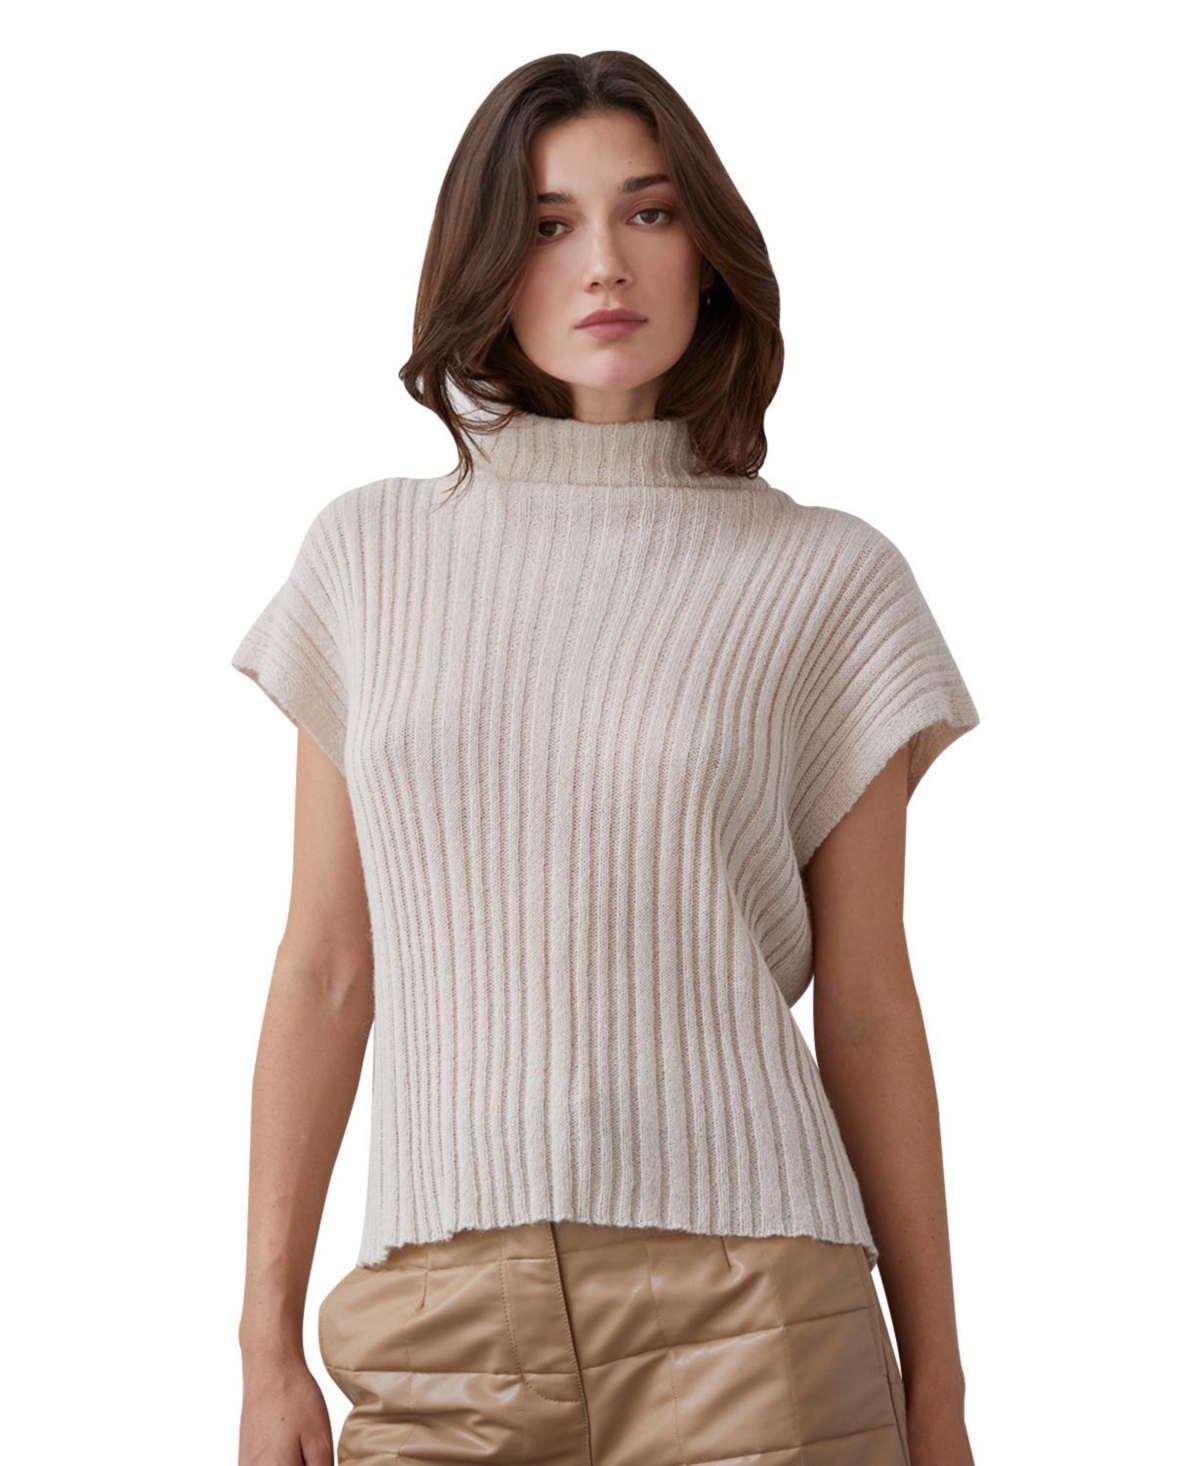 Women's Jay Mock Neck Ribbed Sweater Top - Open white + cream